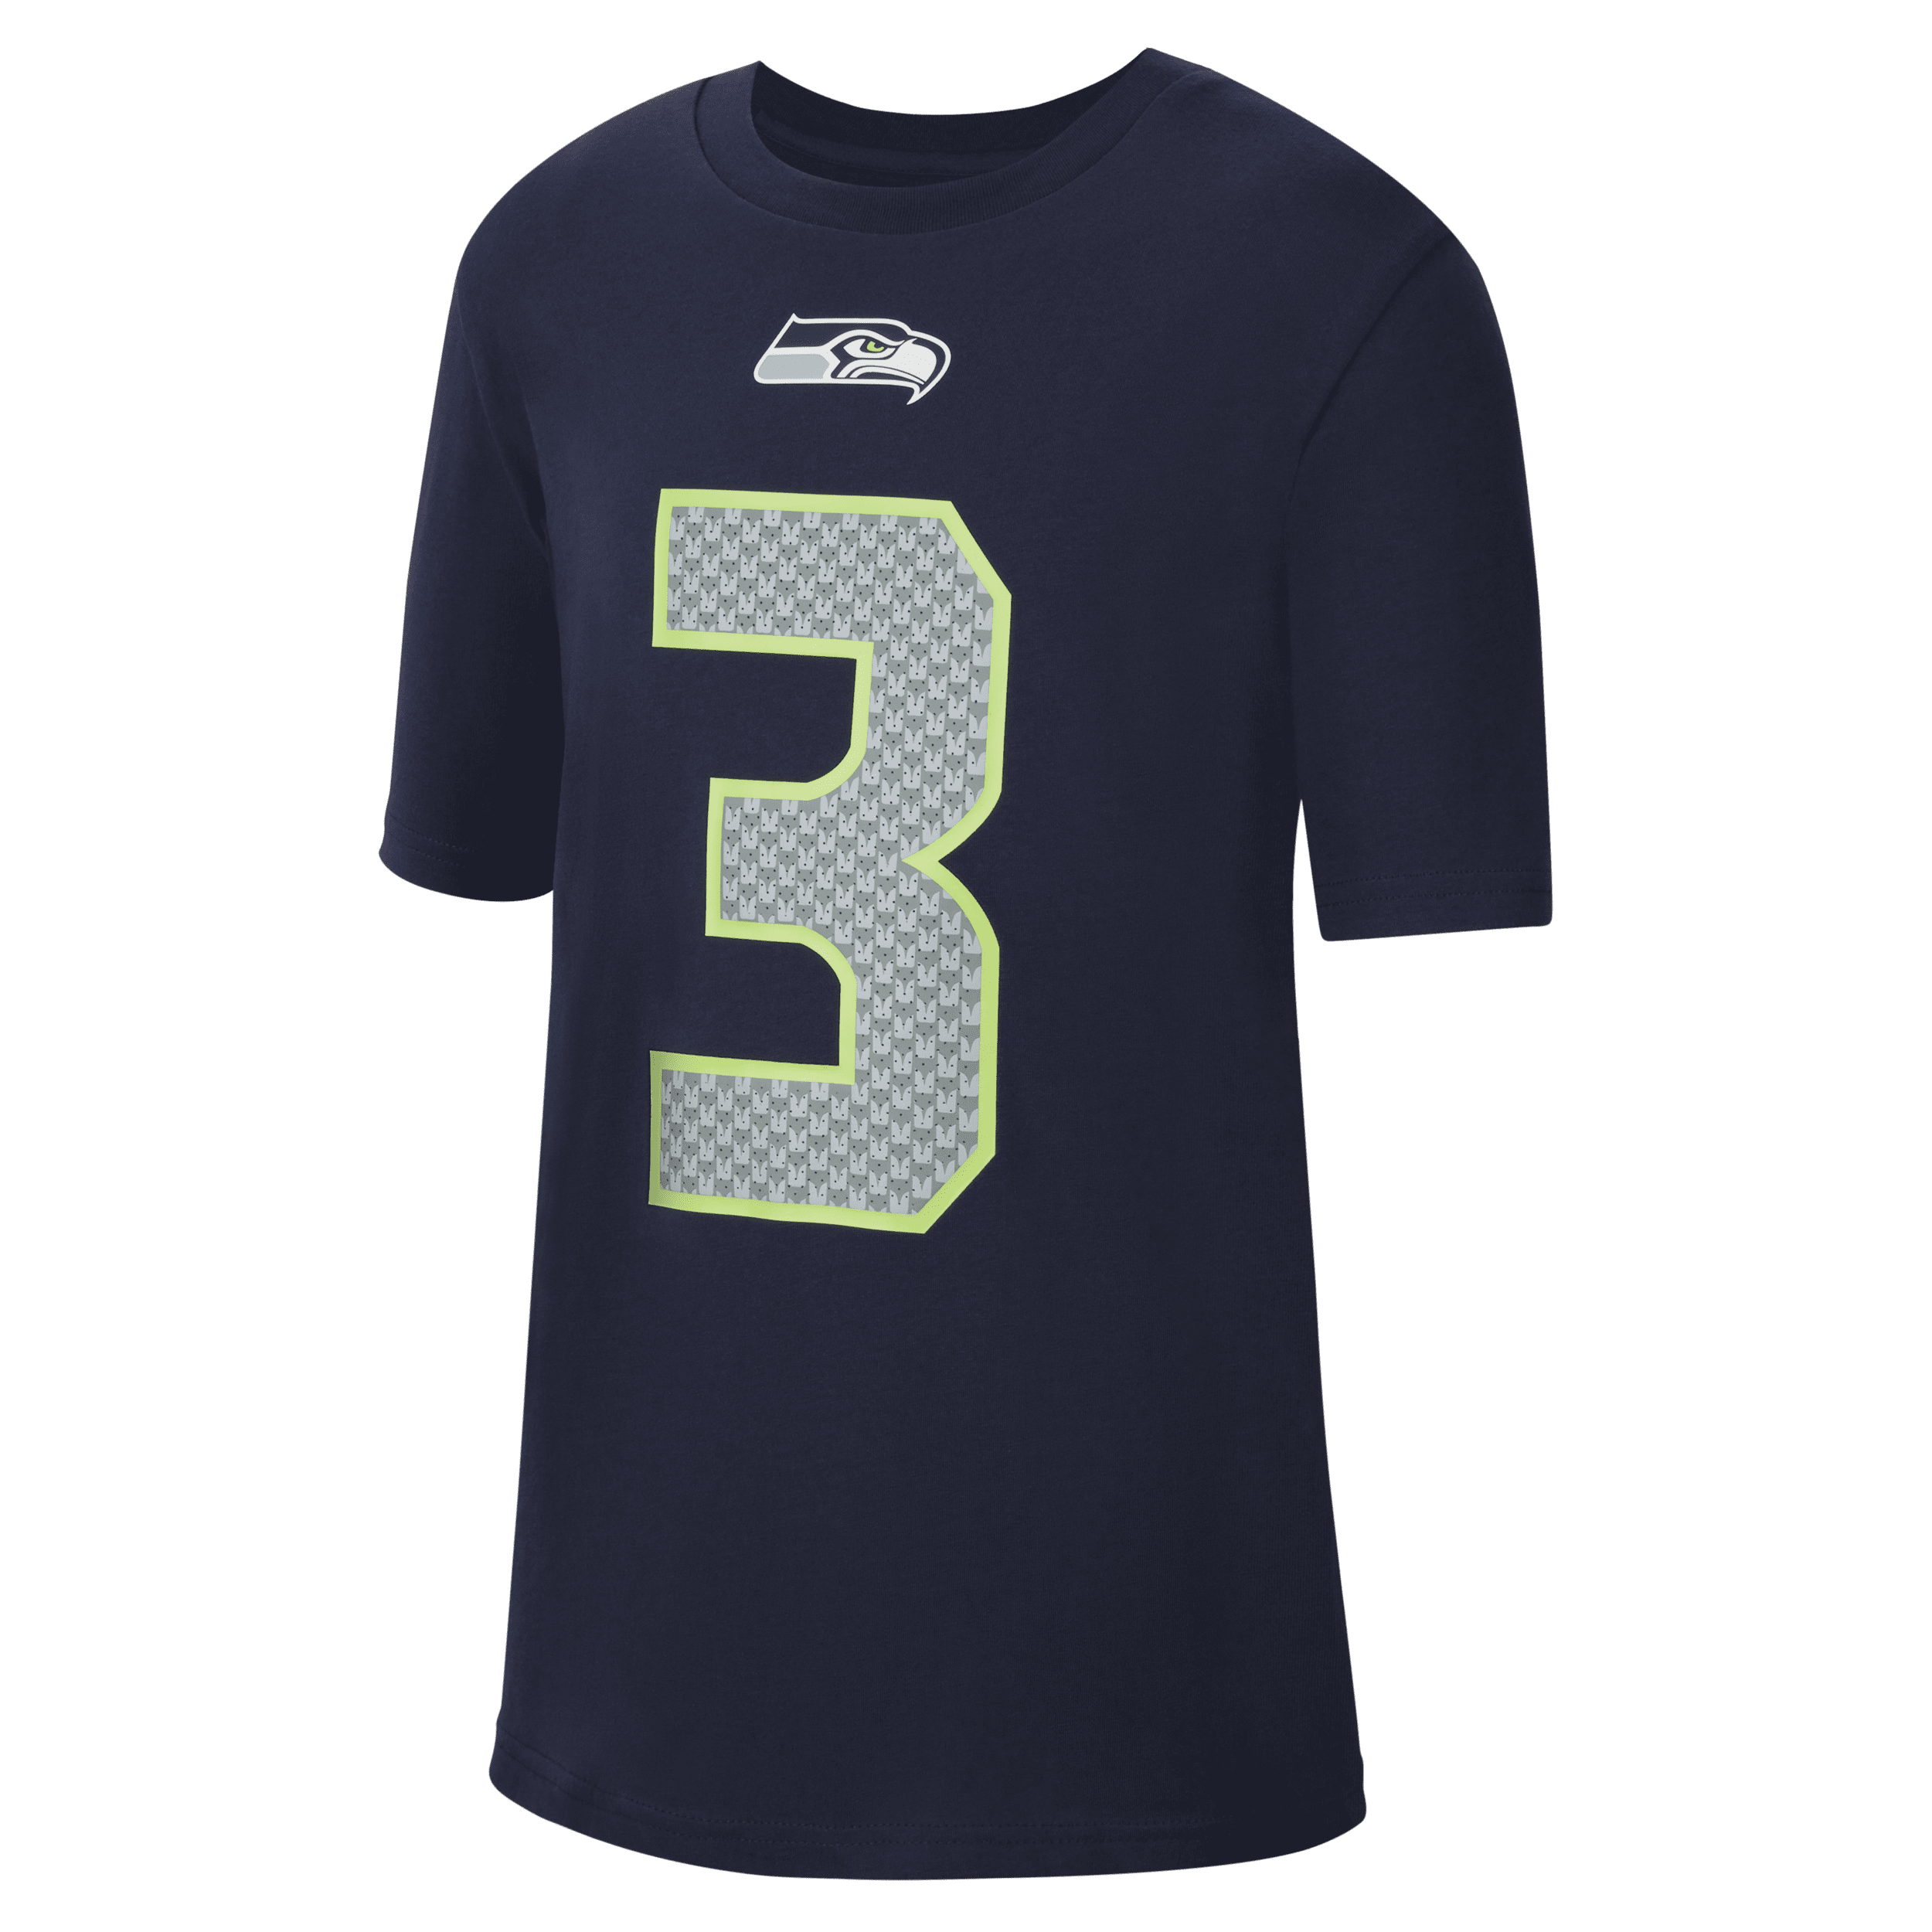 T-shirt Nike (NFL Seattle Seahawks) - Ragazzi - Blu